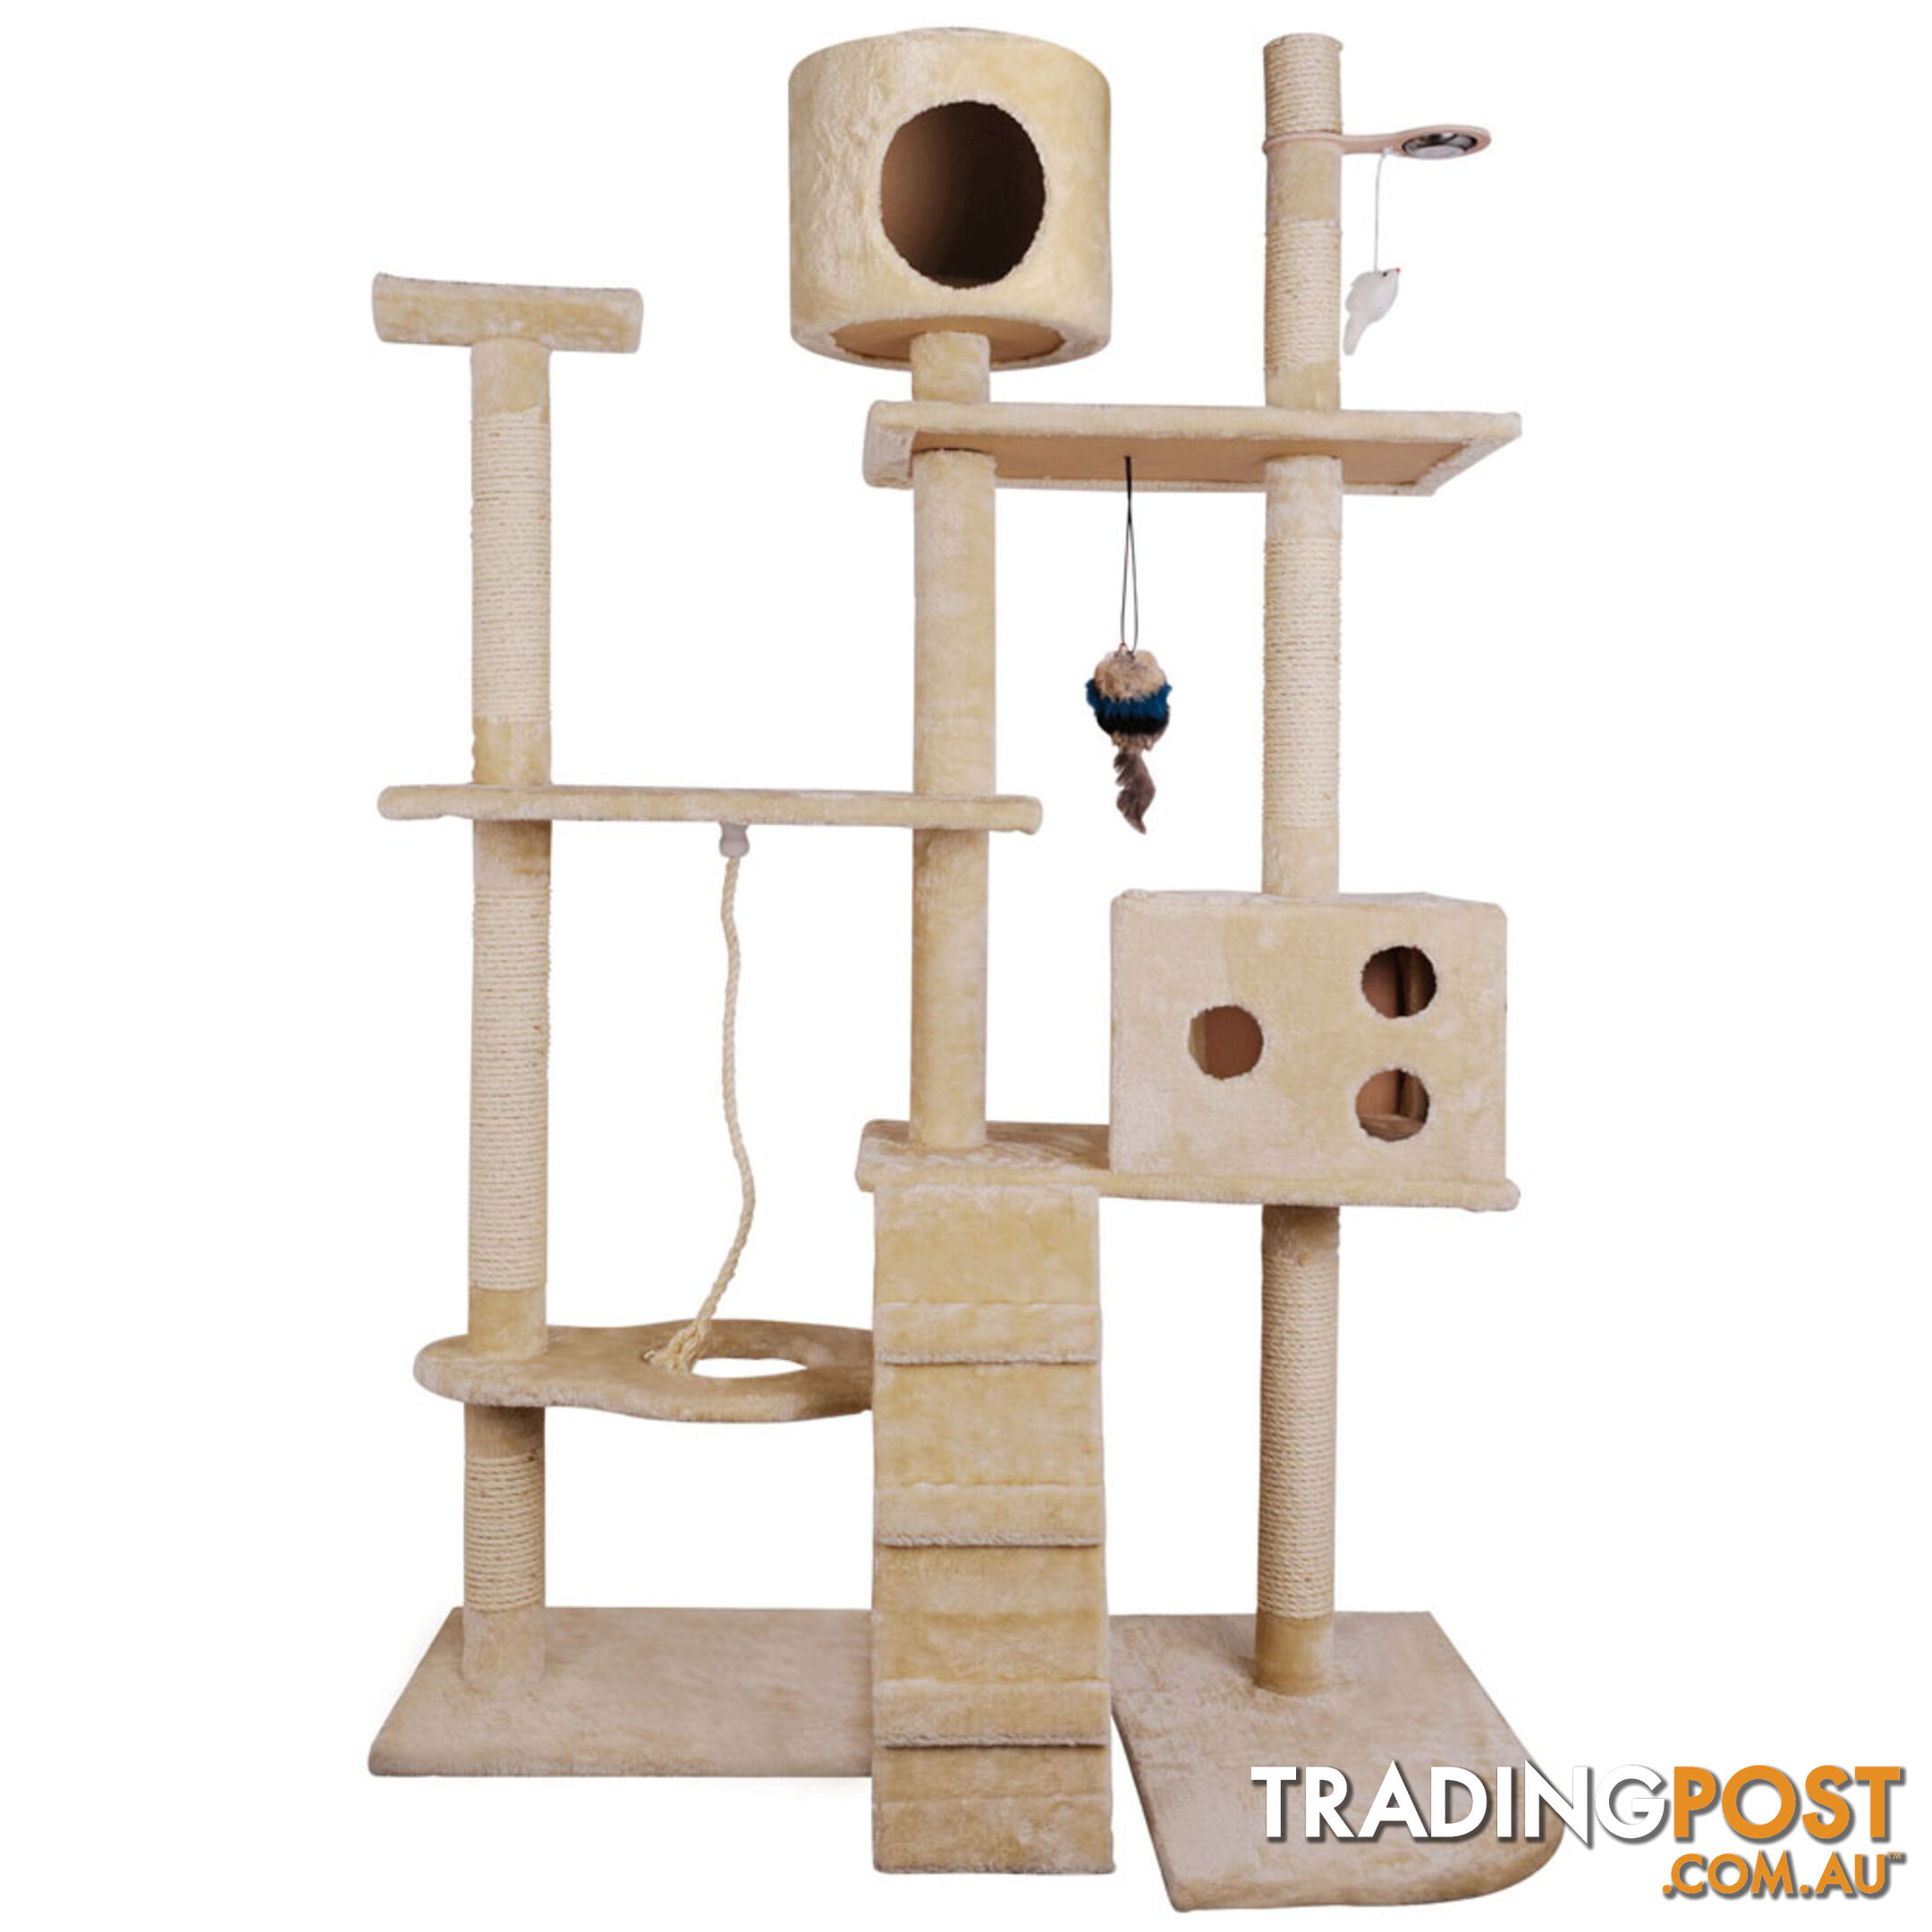 Cat Scratching Poles Post Furniture Tree 170cm Beige